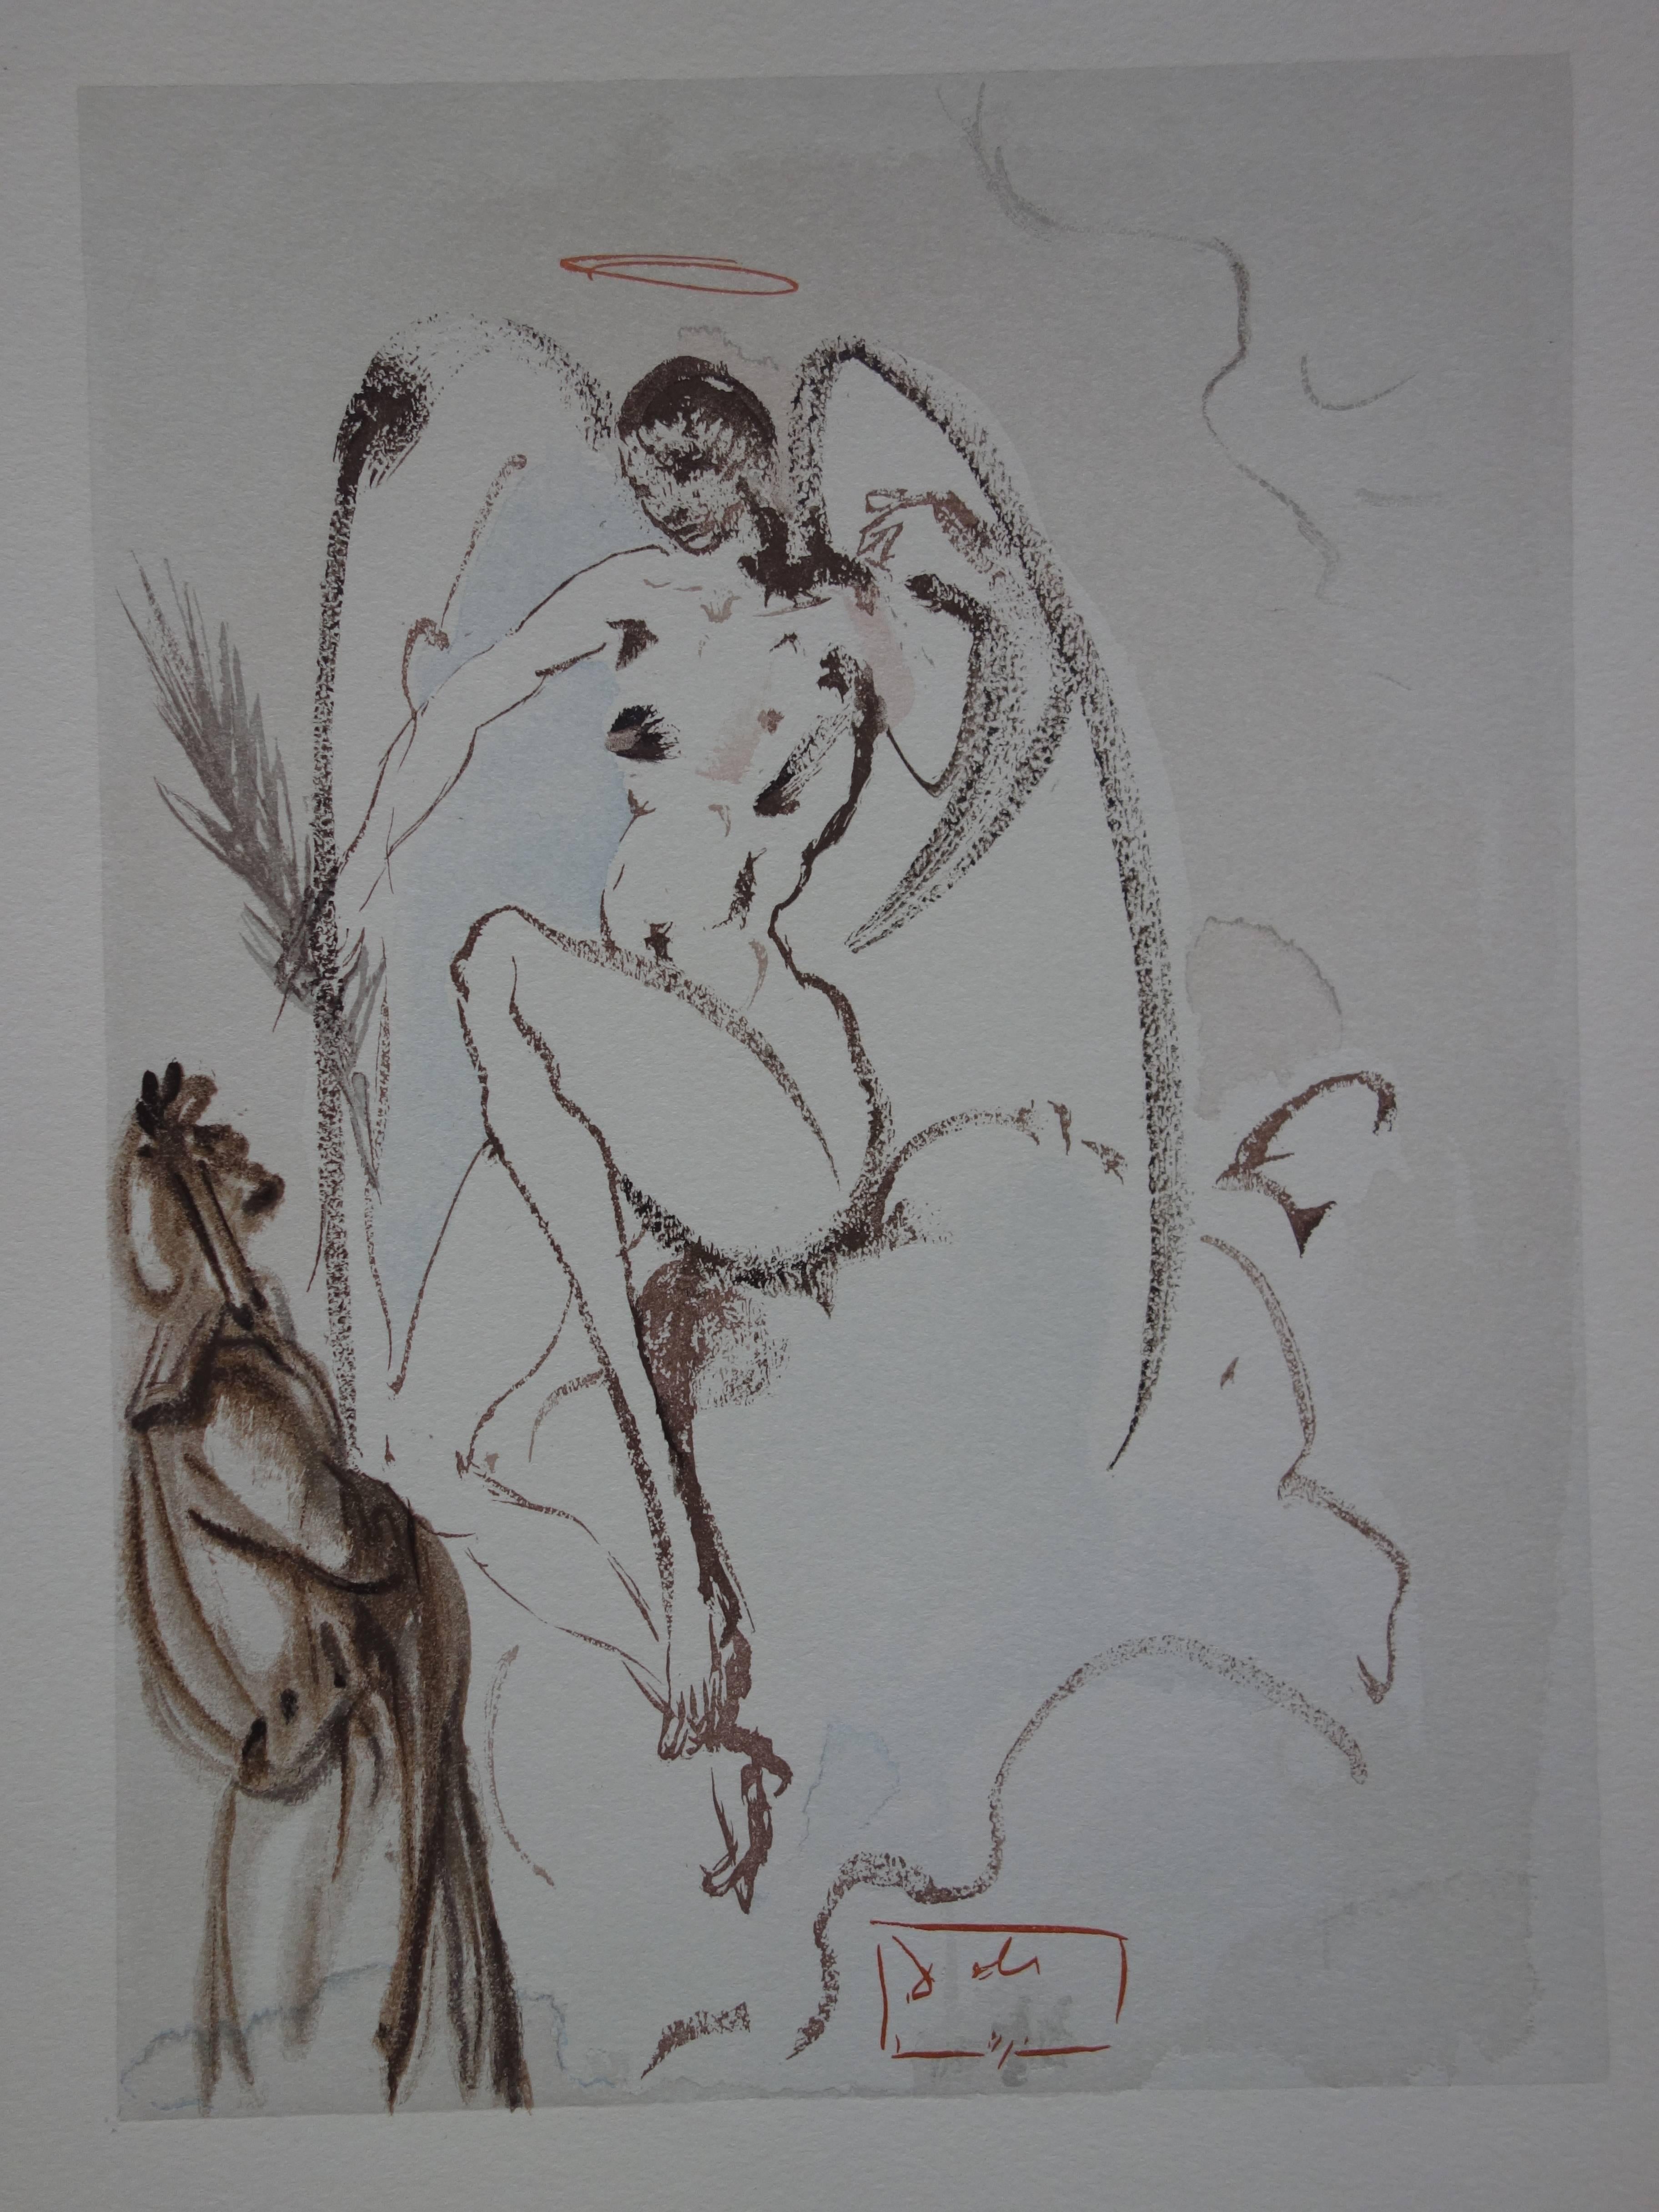 Heaven 28 - The Archangel Gabriel - Woodcut - 1963 (Field p. 189) - Surrealist Print by Salvador Dalí